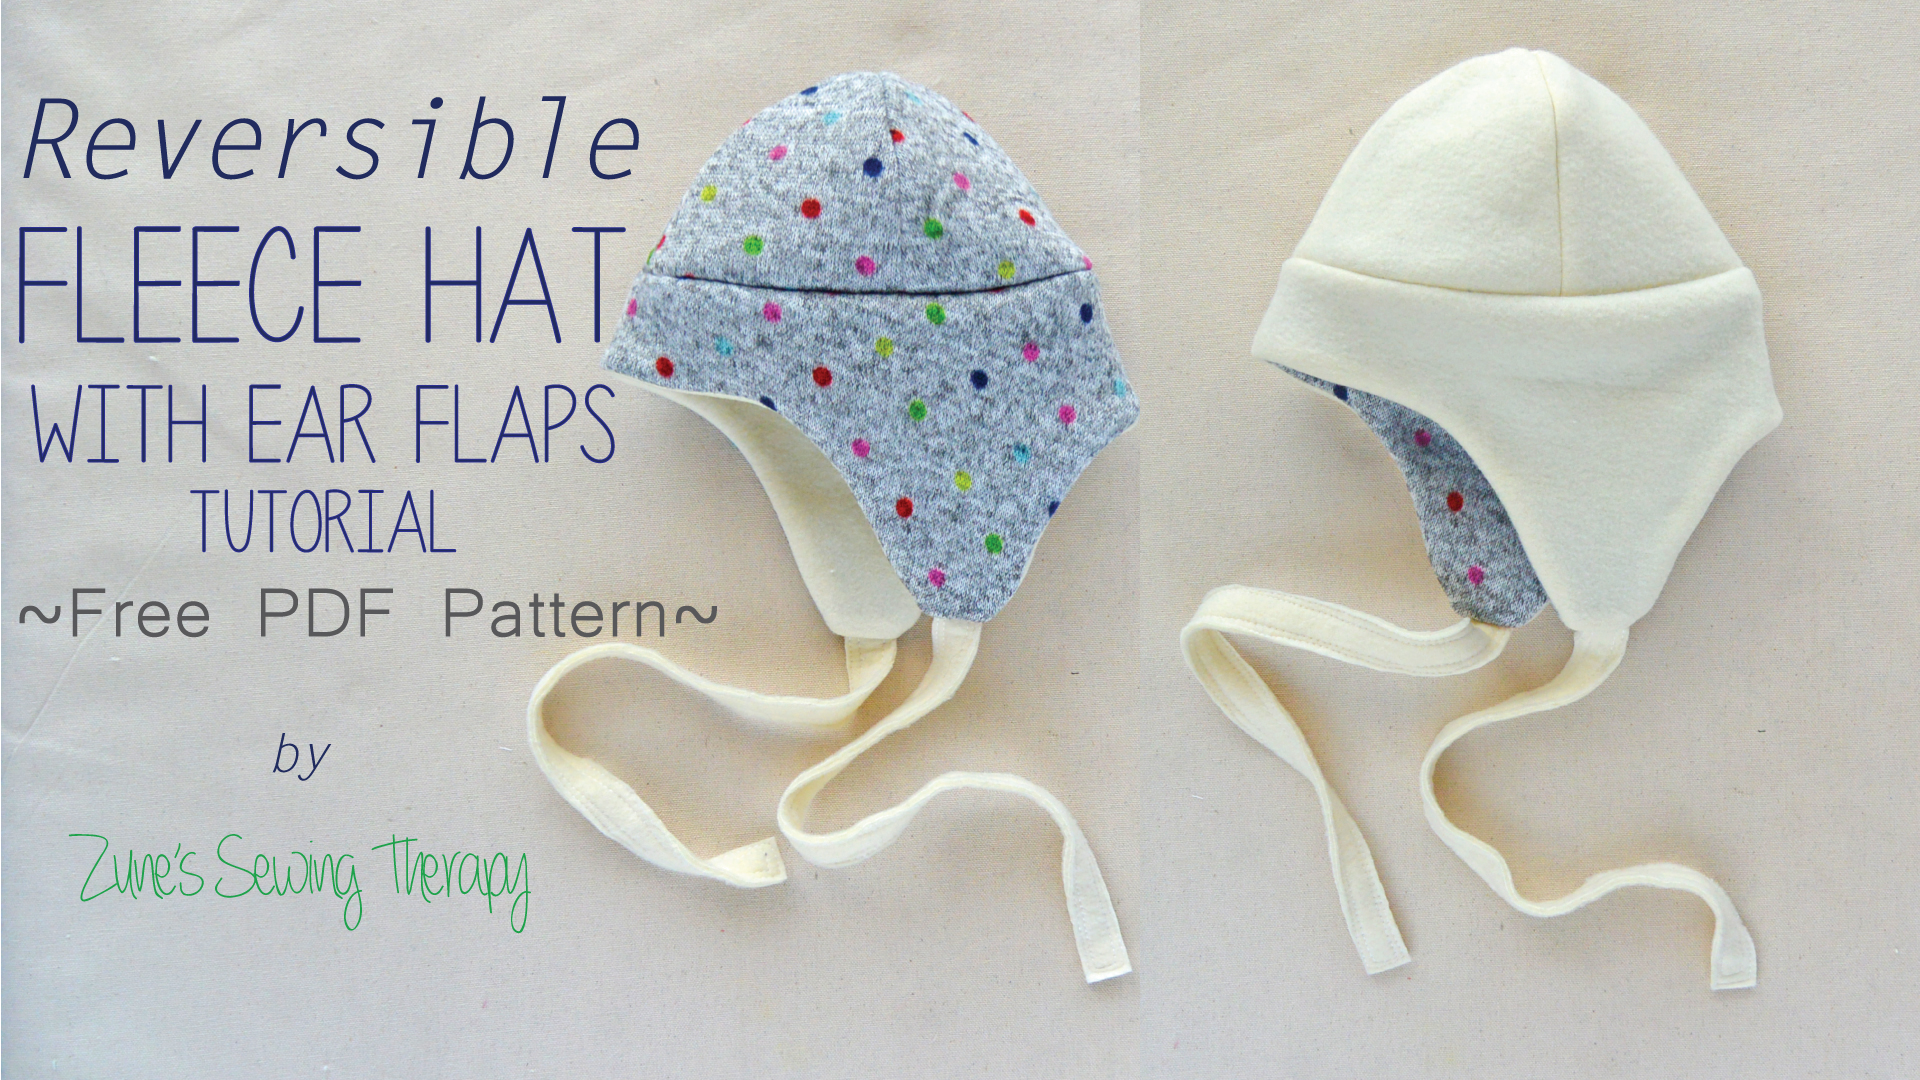 Reversible Fleece Hat with Ear Flaps Tutorial – FREE Printable PDF 